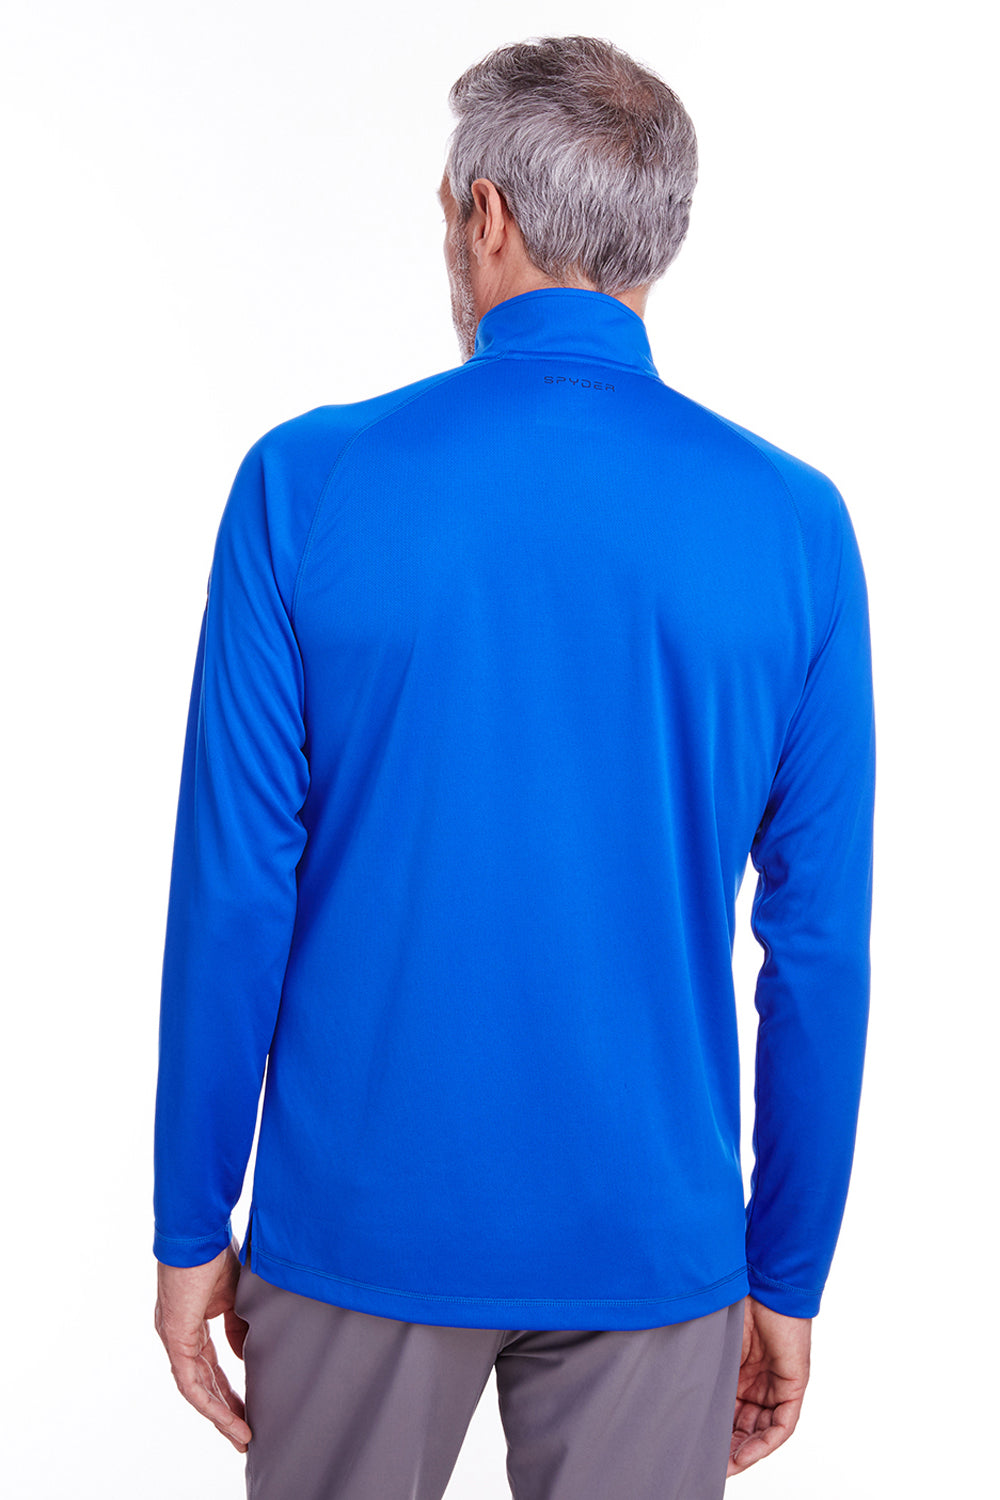 Spyder S16797 Mens Freestyle 1/4 Zip Sweatshirt Royal Blue Back